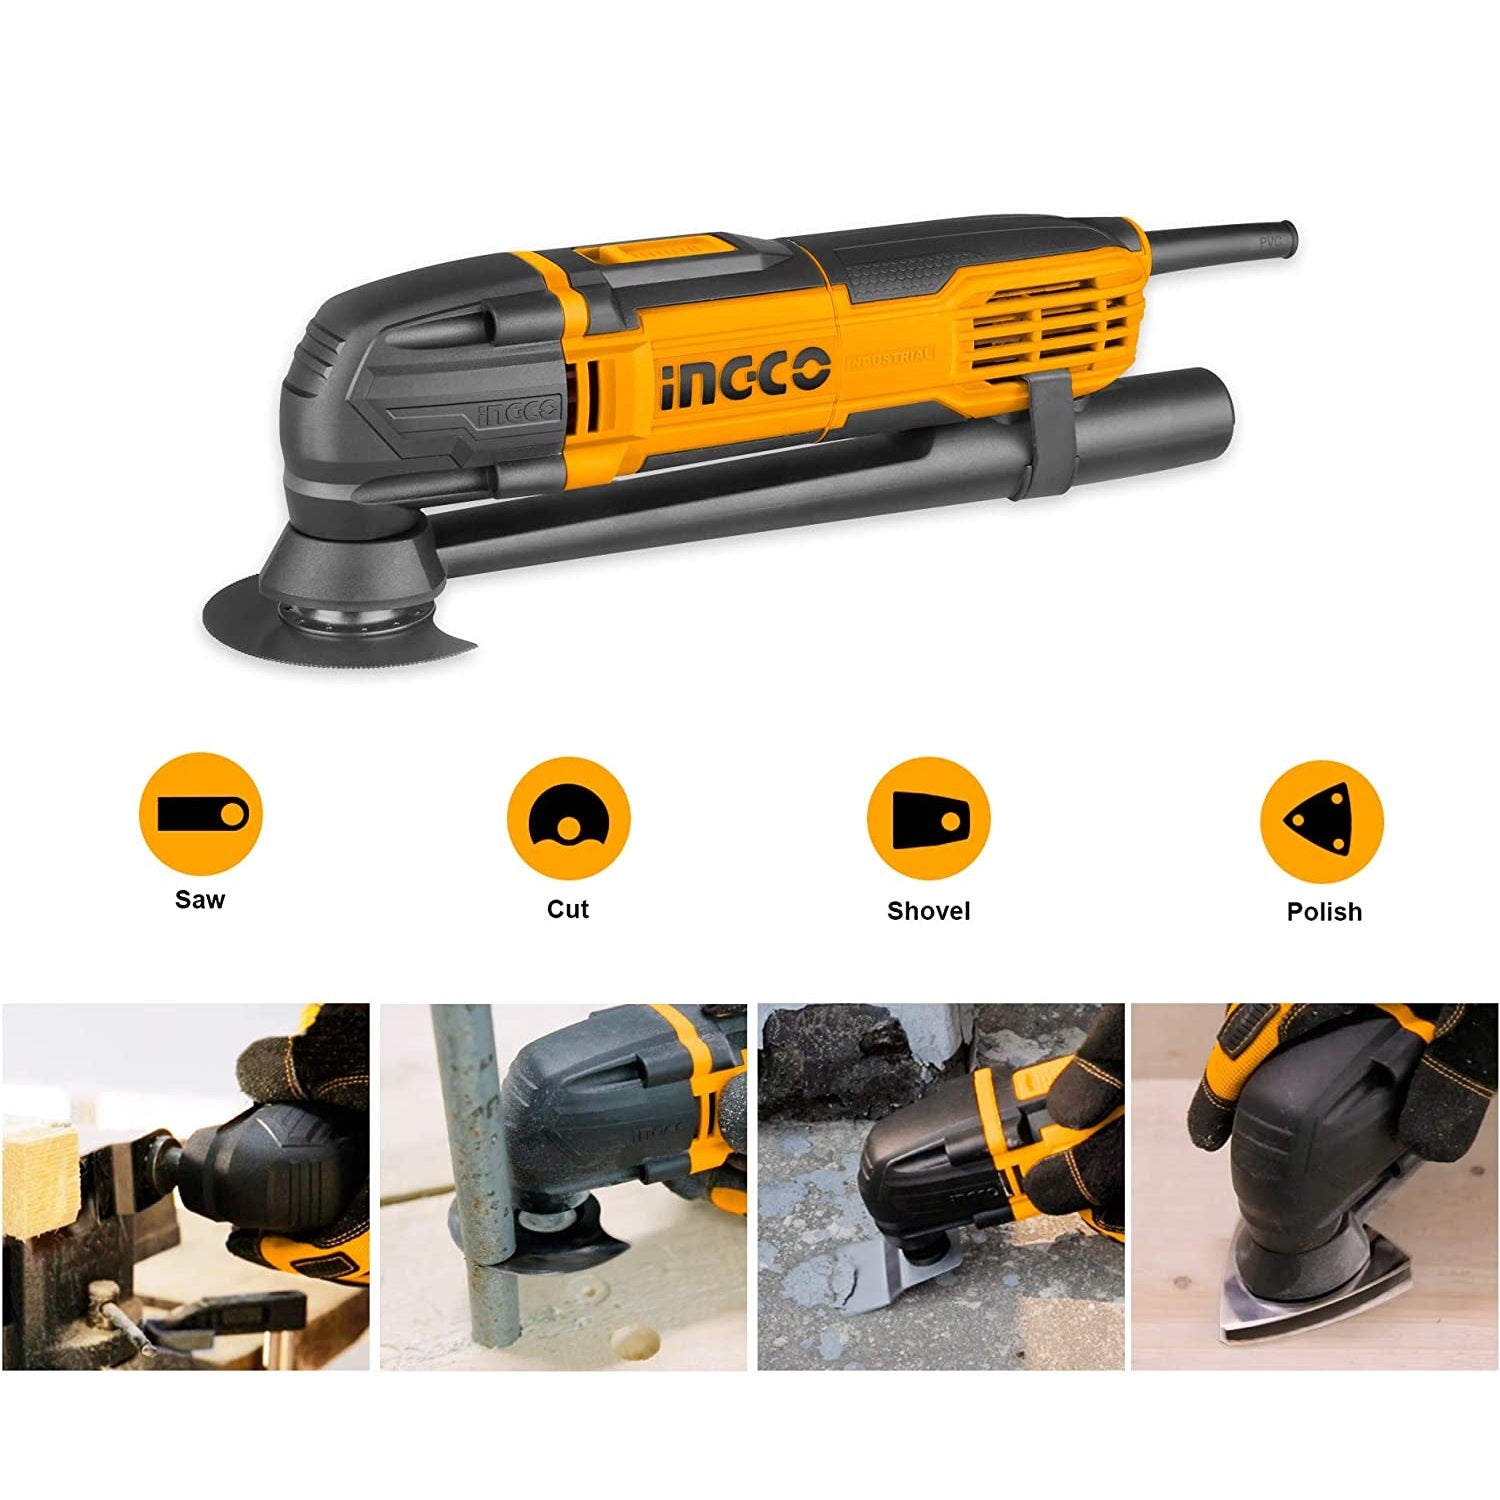 Ingco Oscillating Multi-Tool 300W MF3008